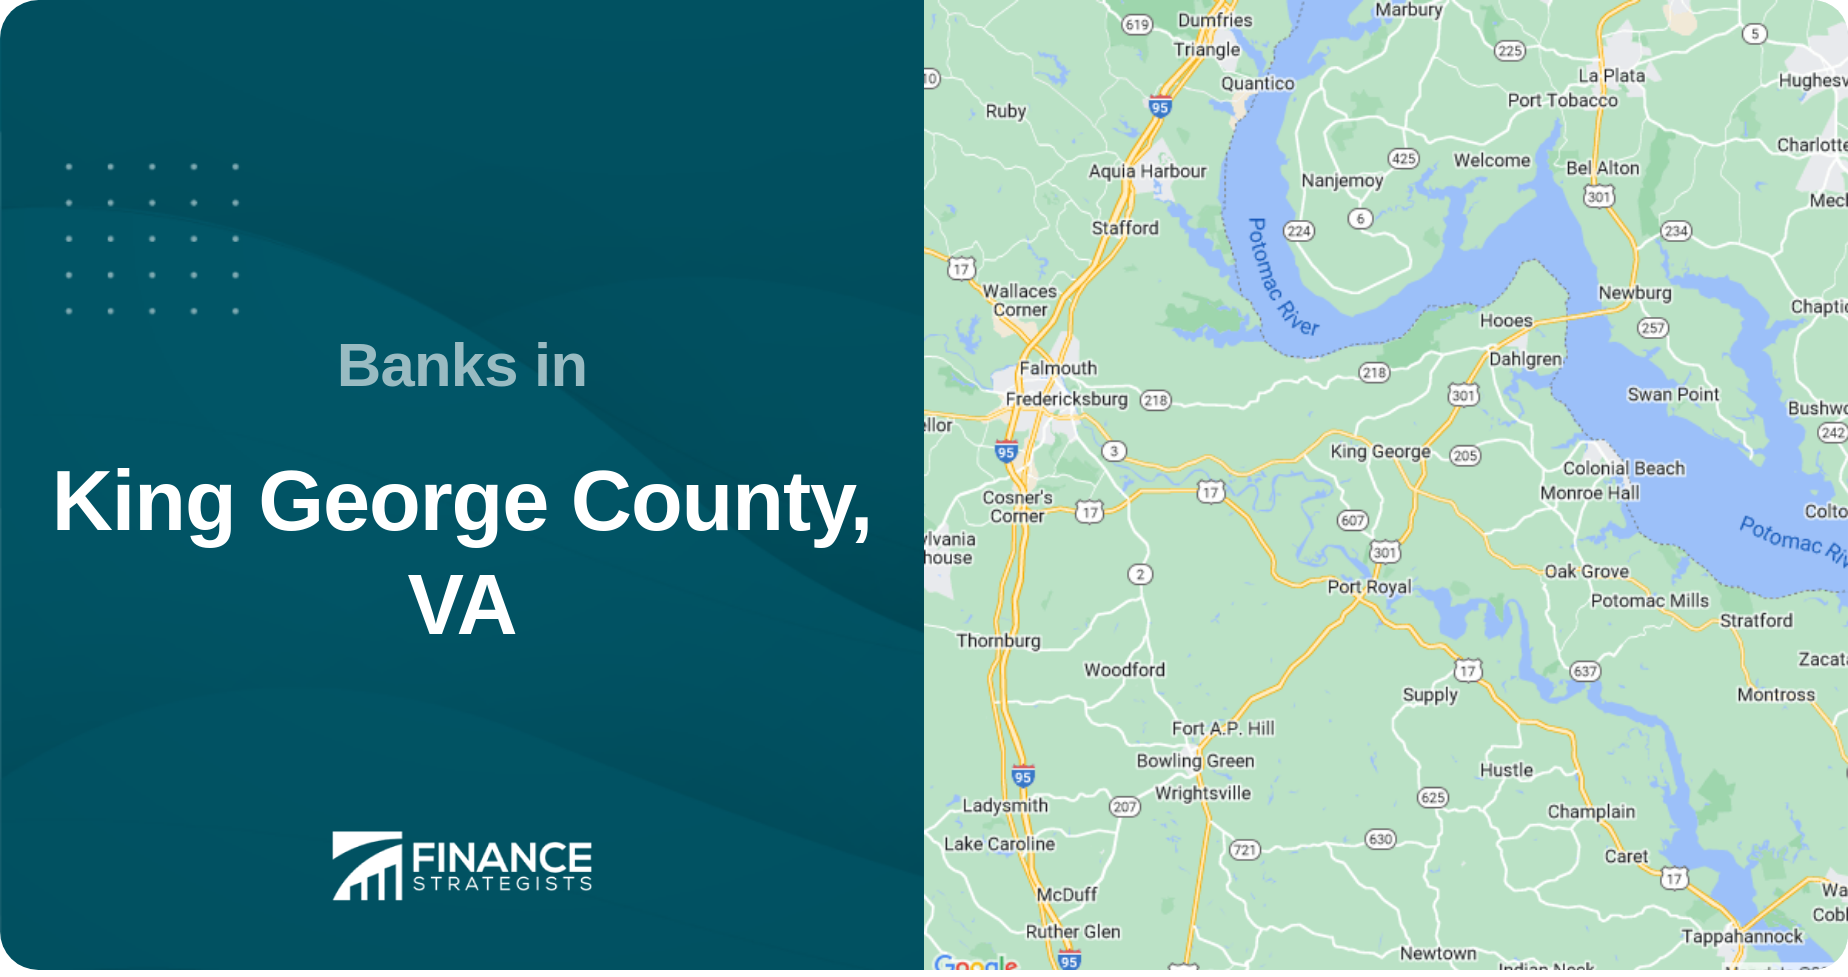 Banks in King George County, VA